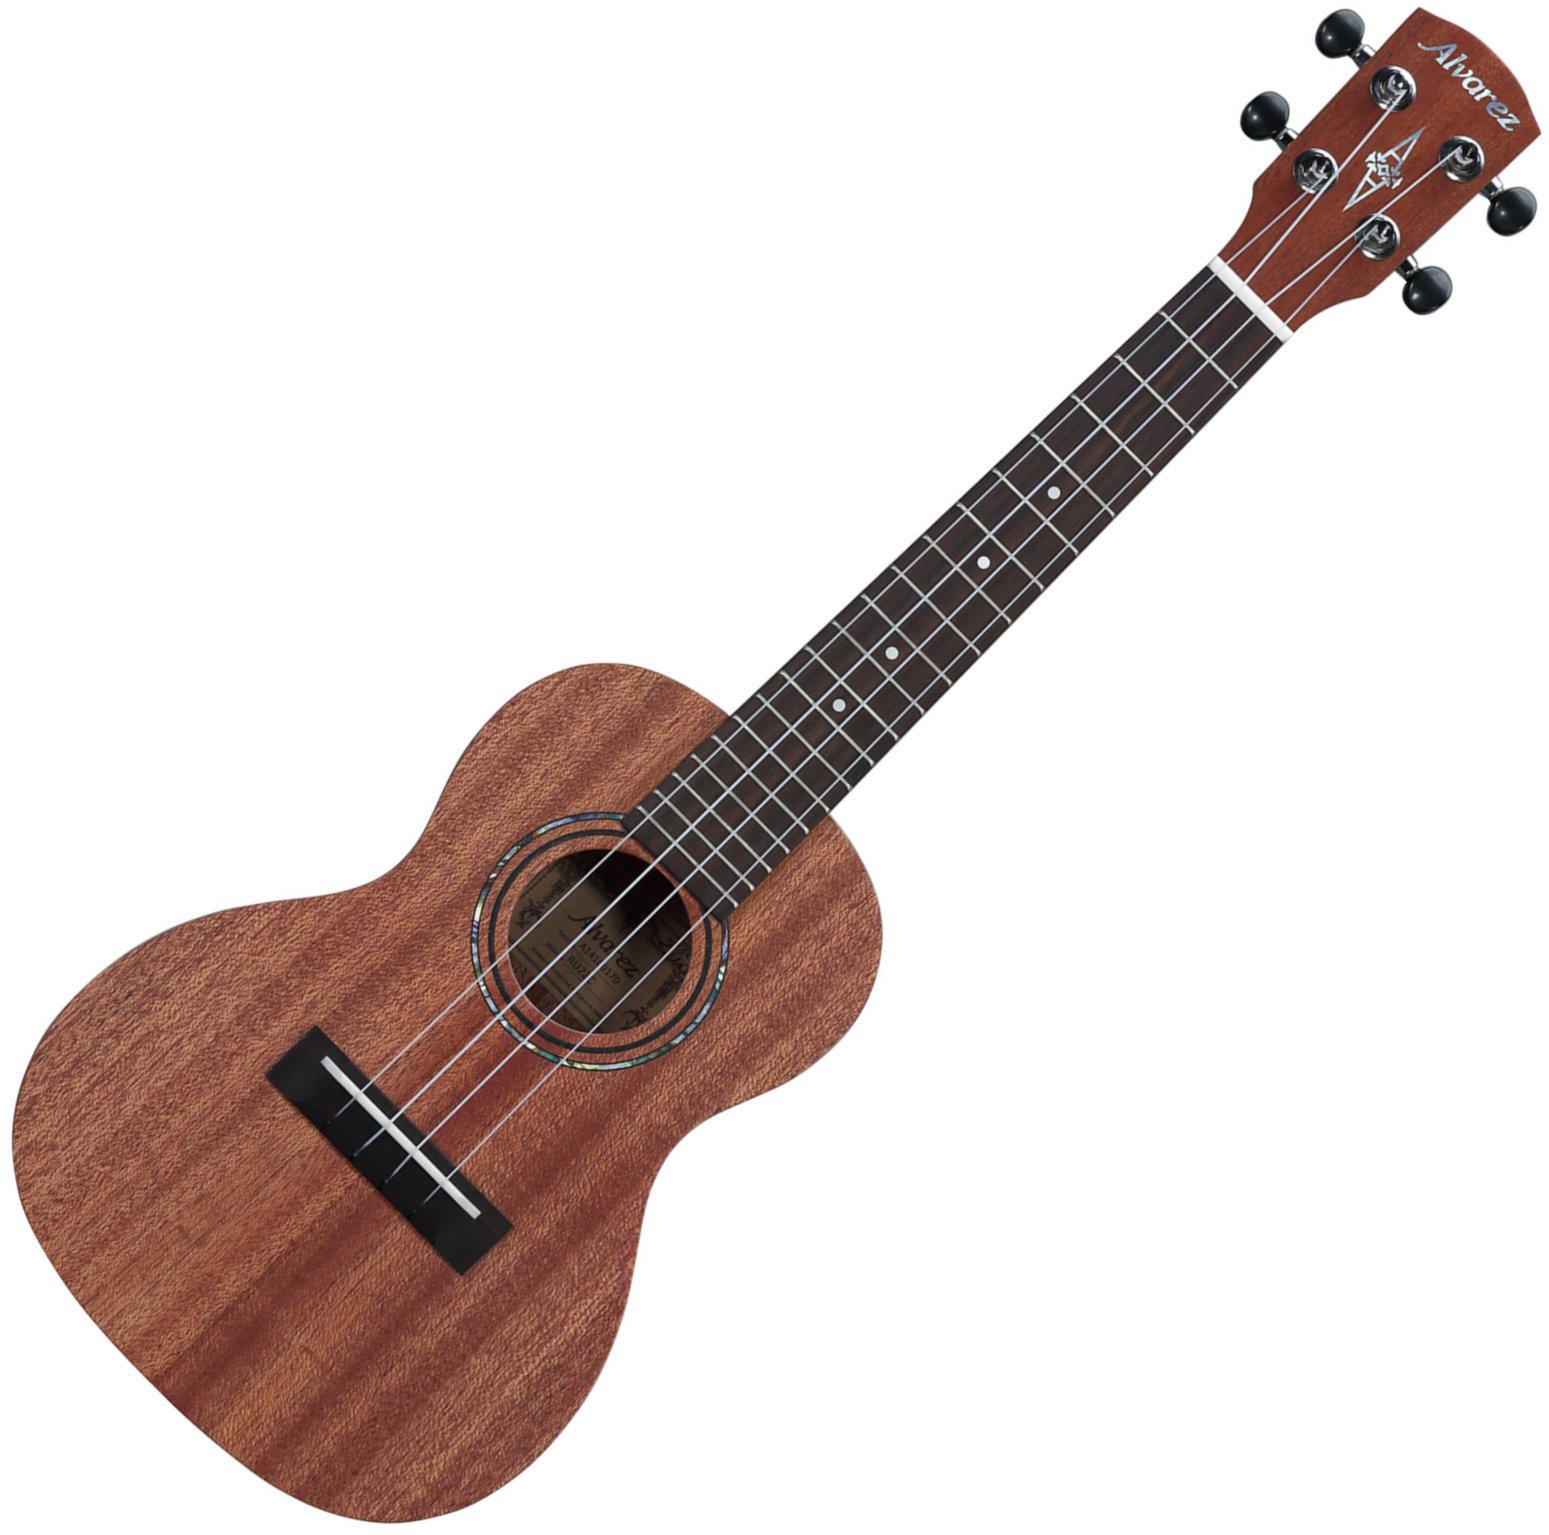 Konsert-ukulele Alvarez RU22C Konsert-ukulele Natural